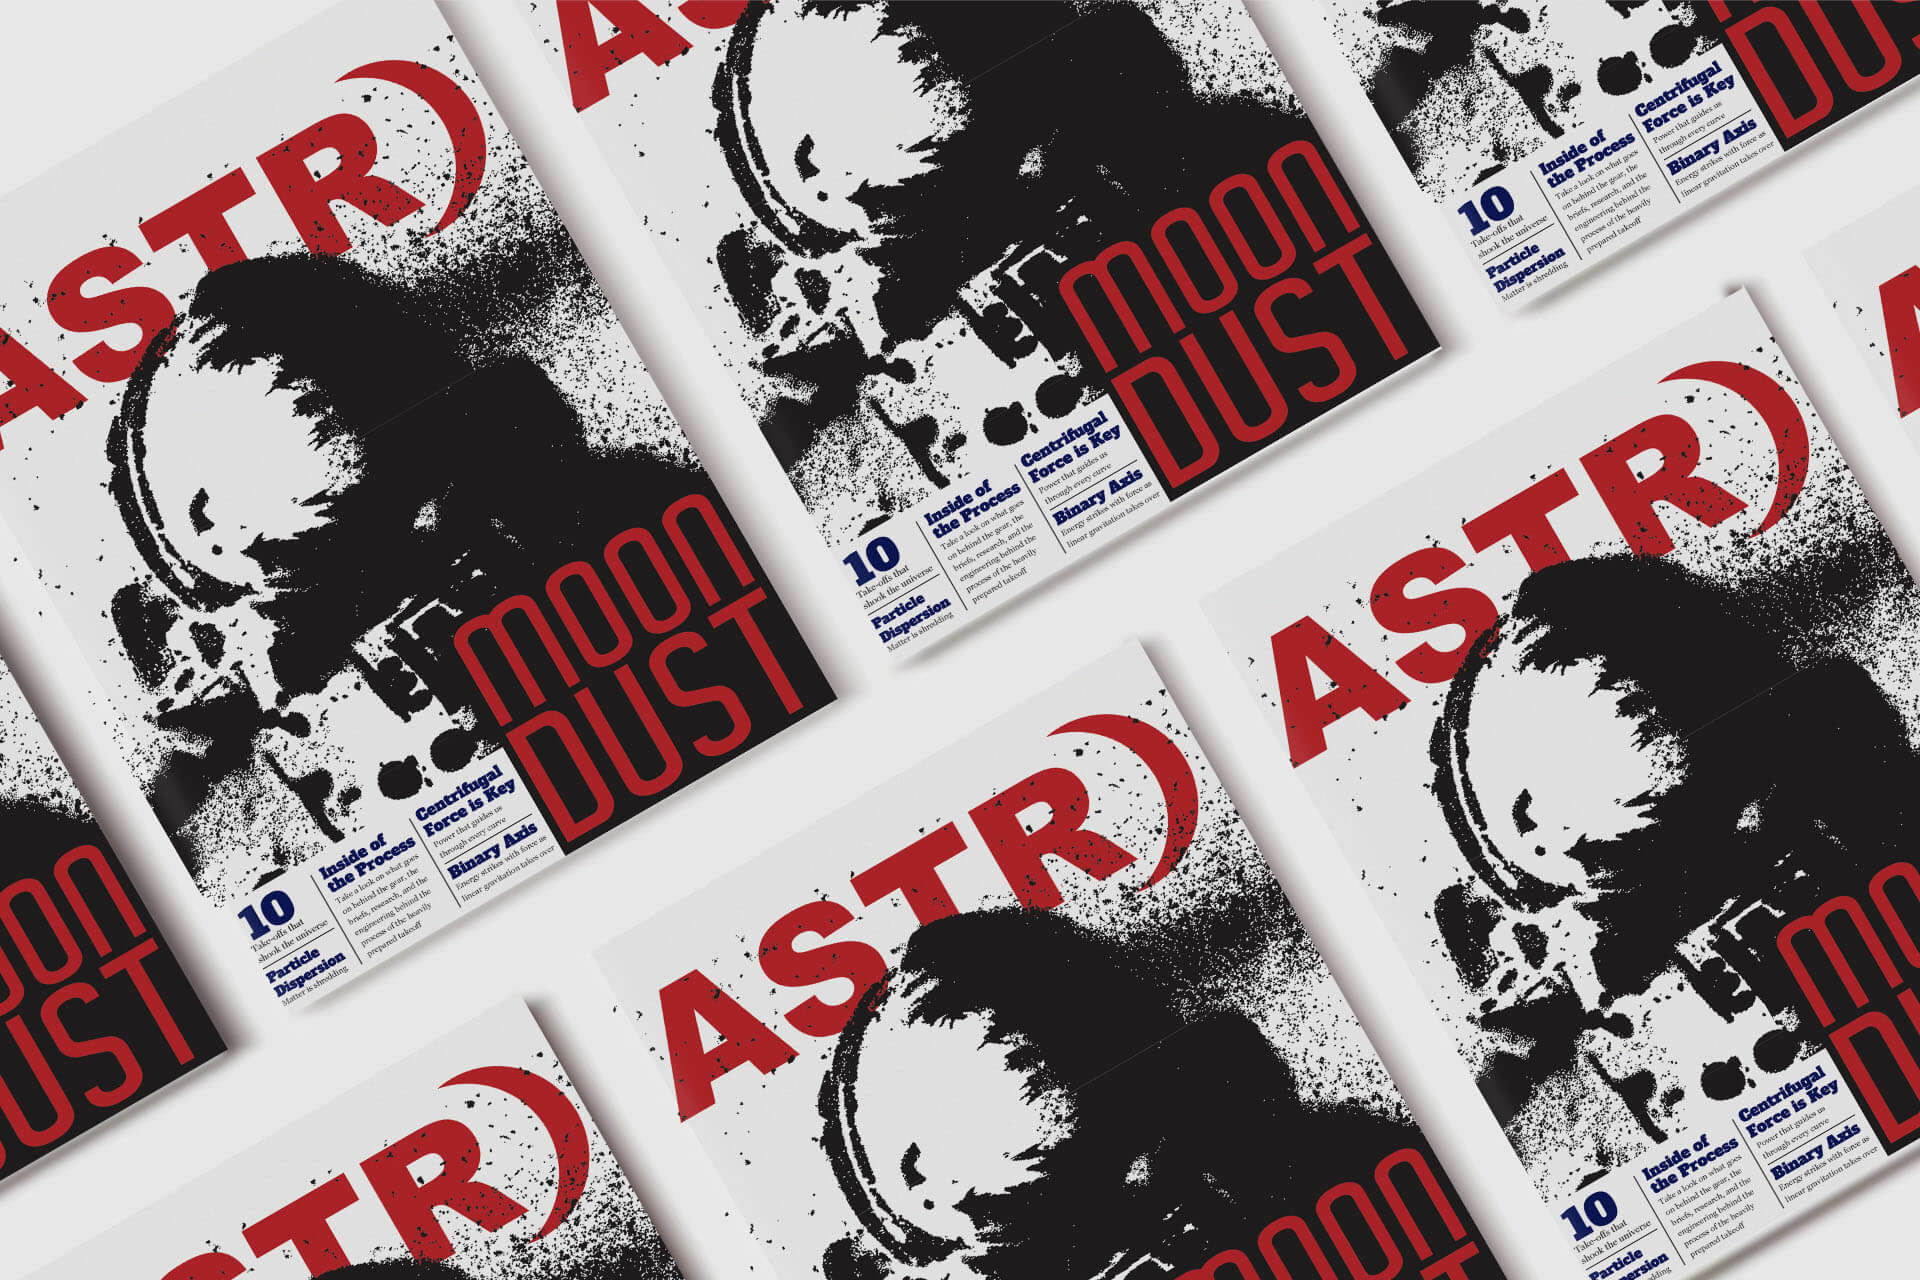 Astro Magazine Cover